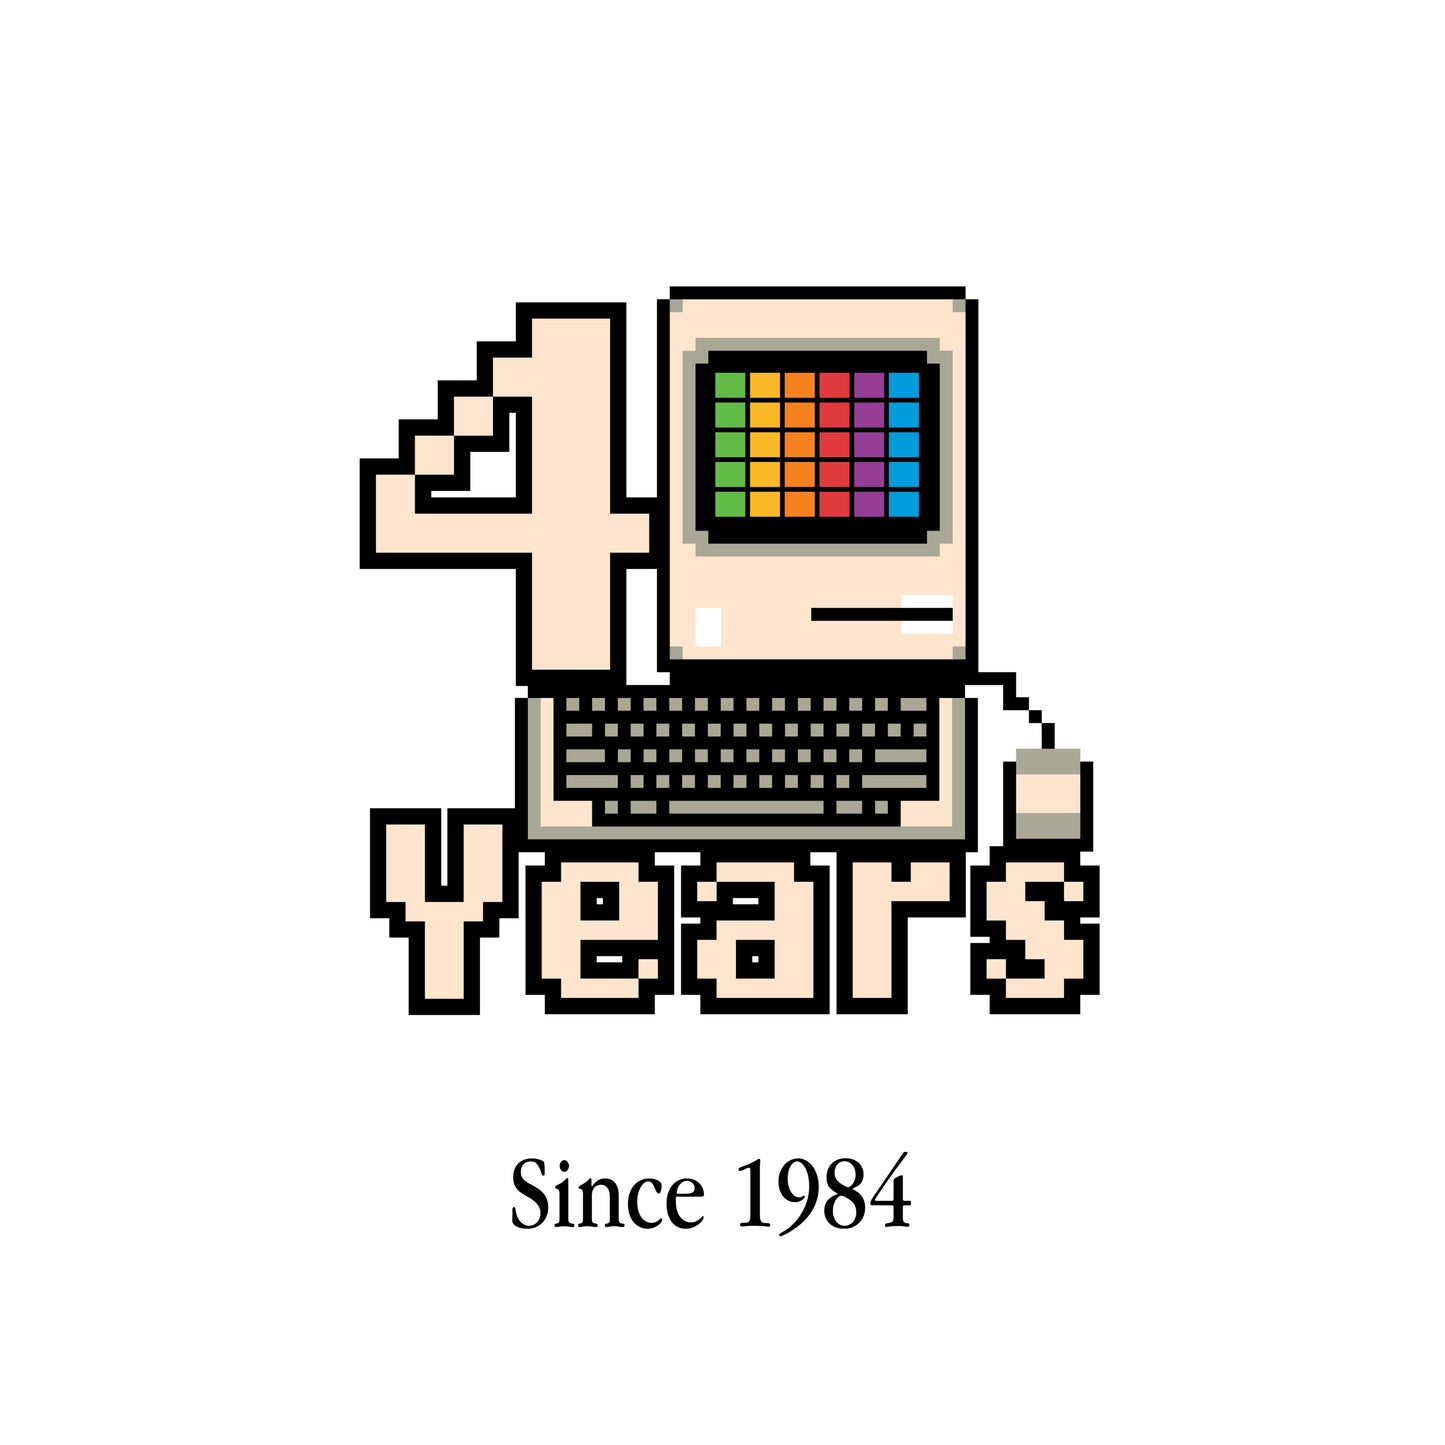 Mac 40 Years